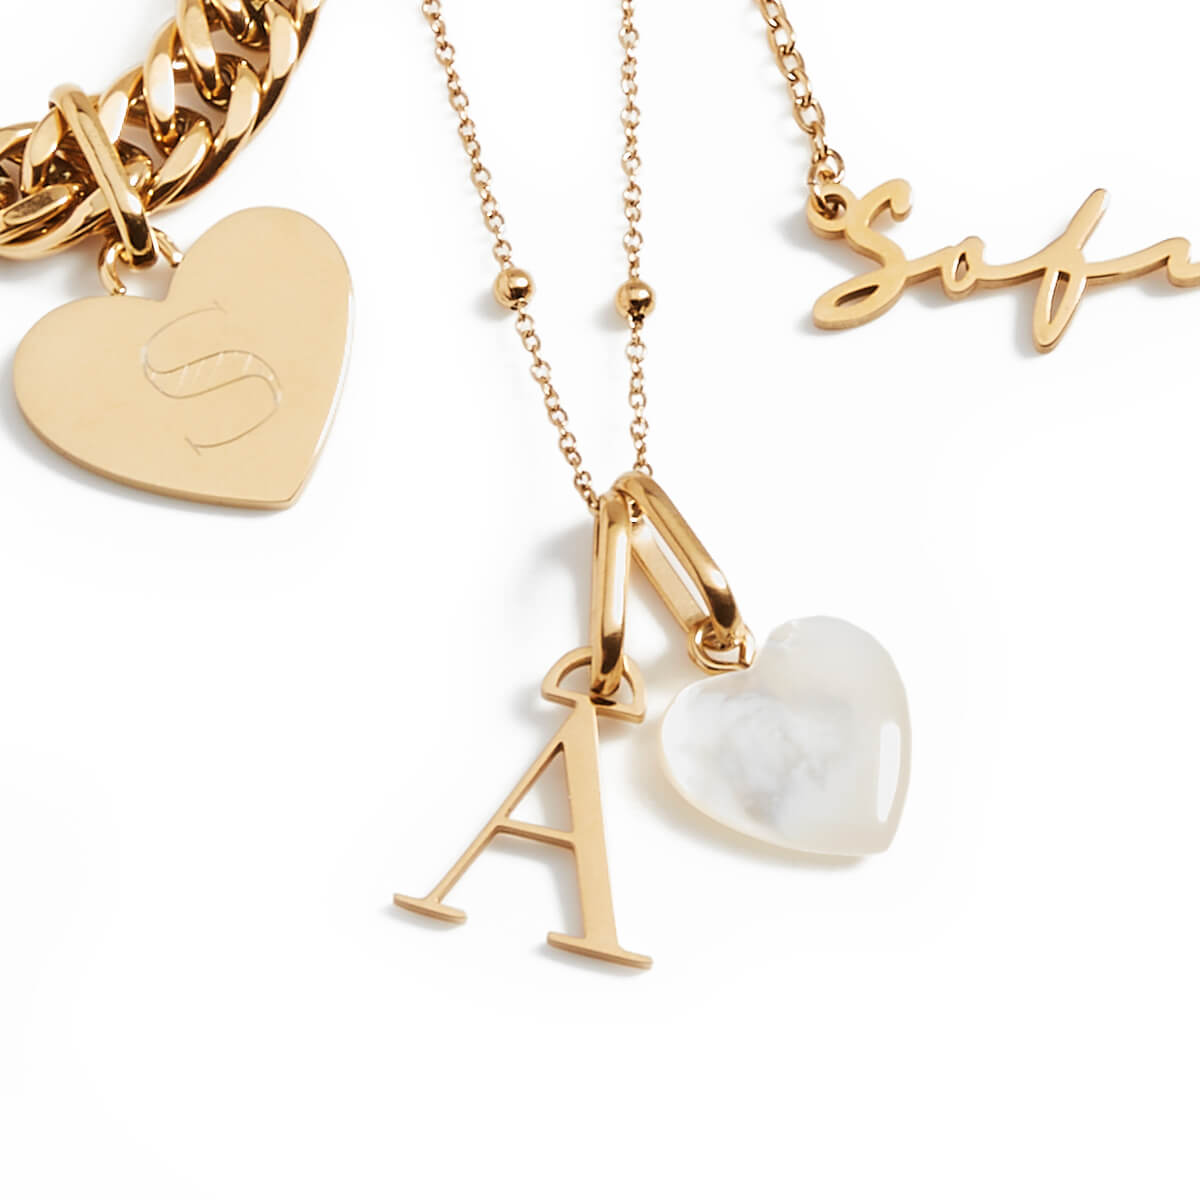 Abbott Lyon - Personalized Luxury Jewelry & Accessories